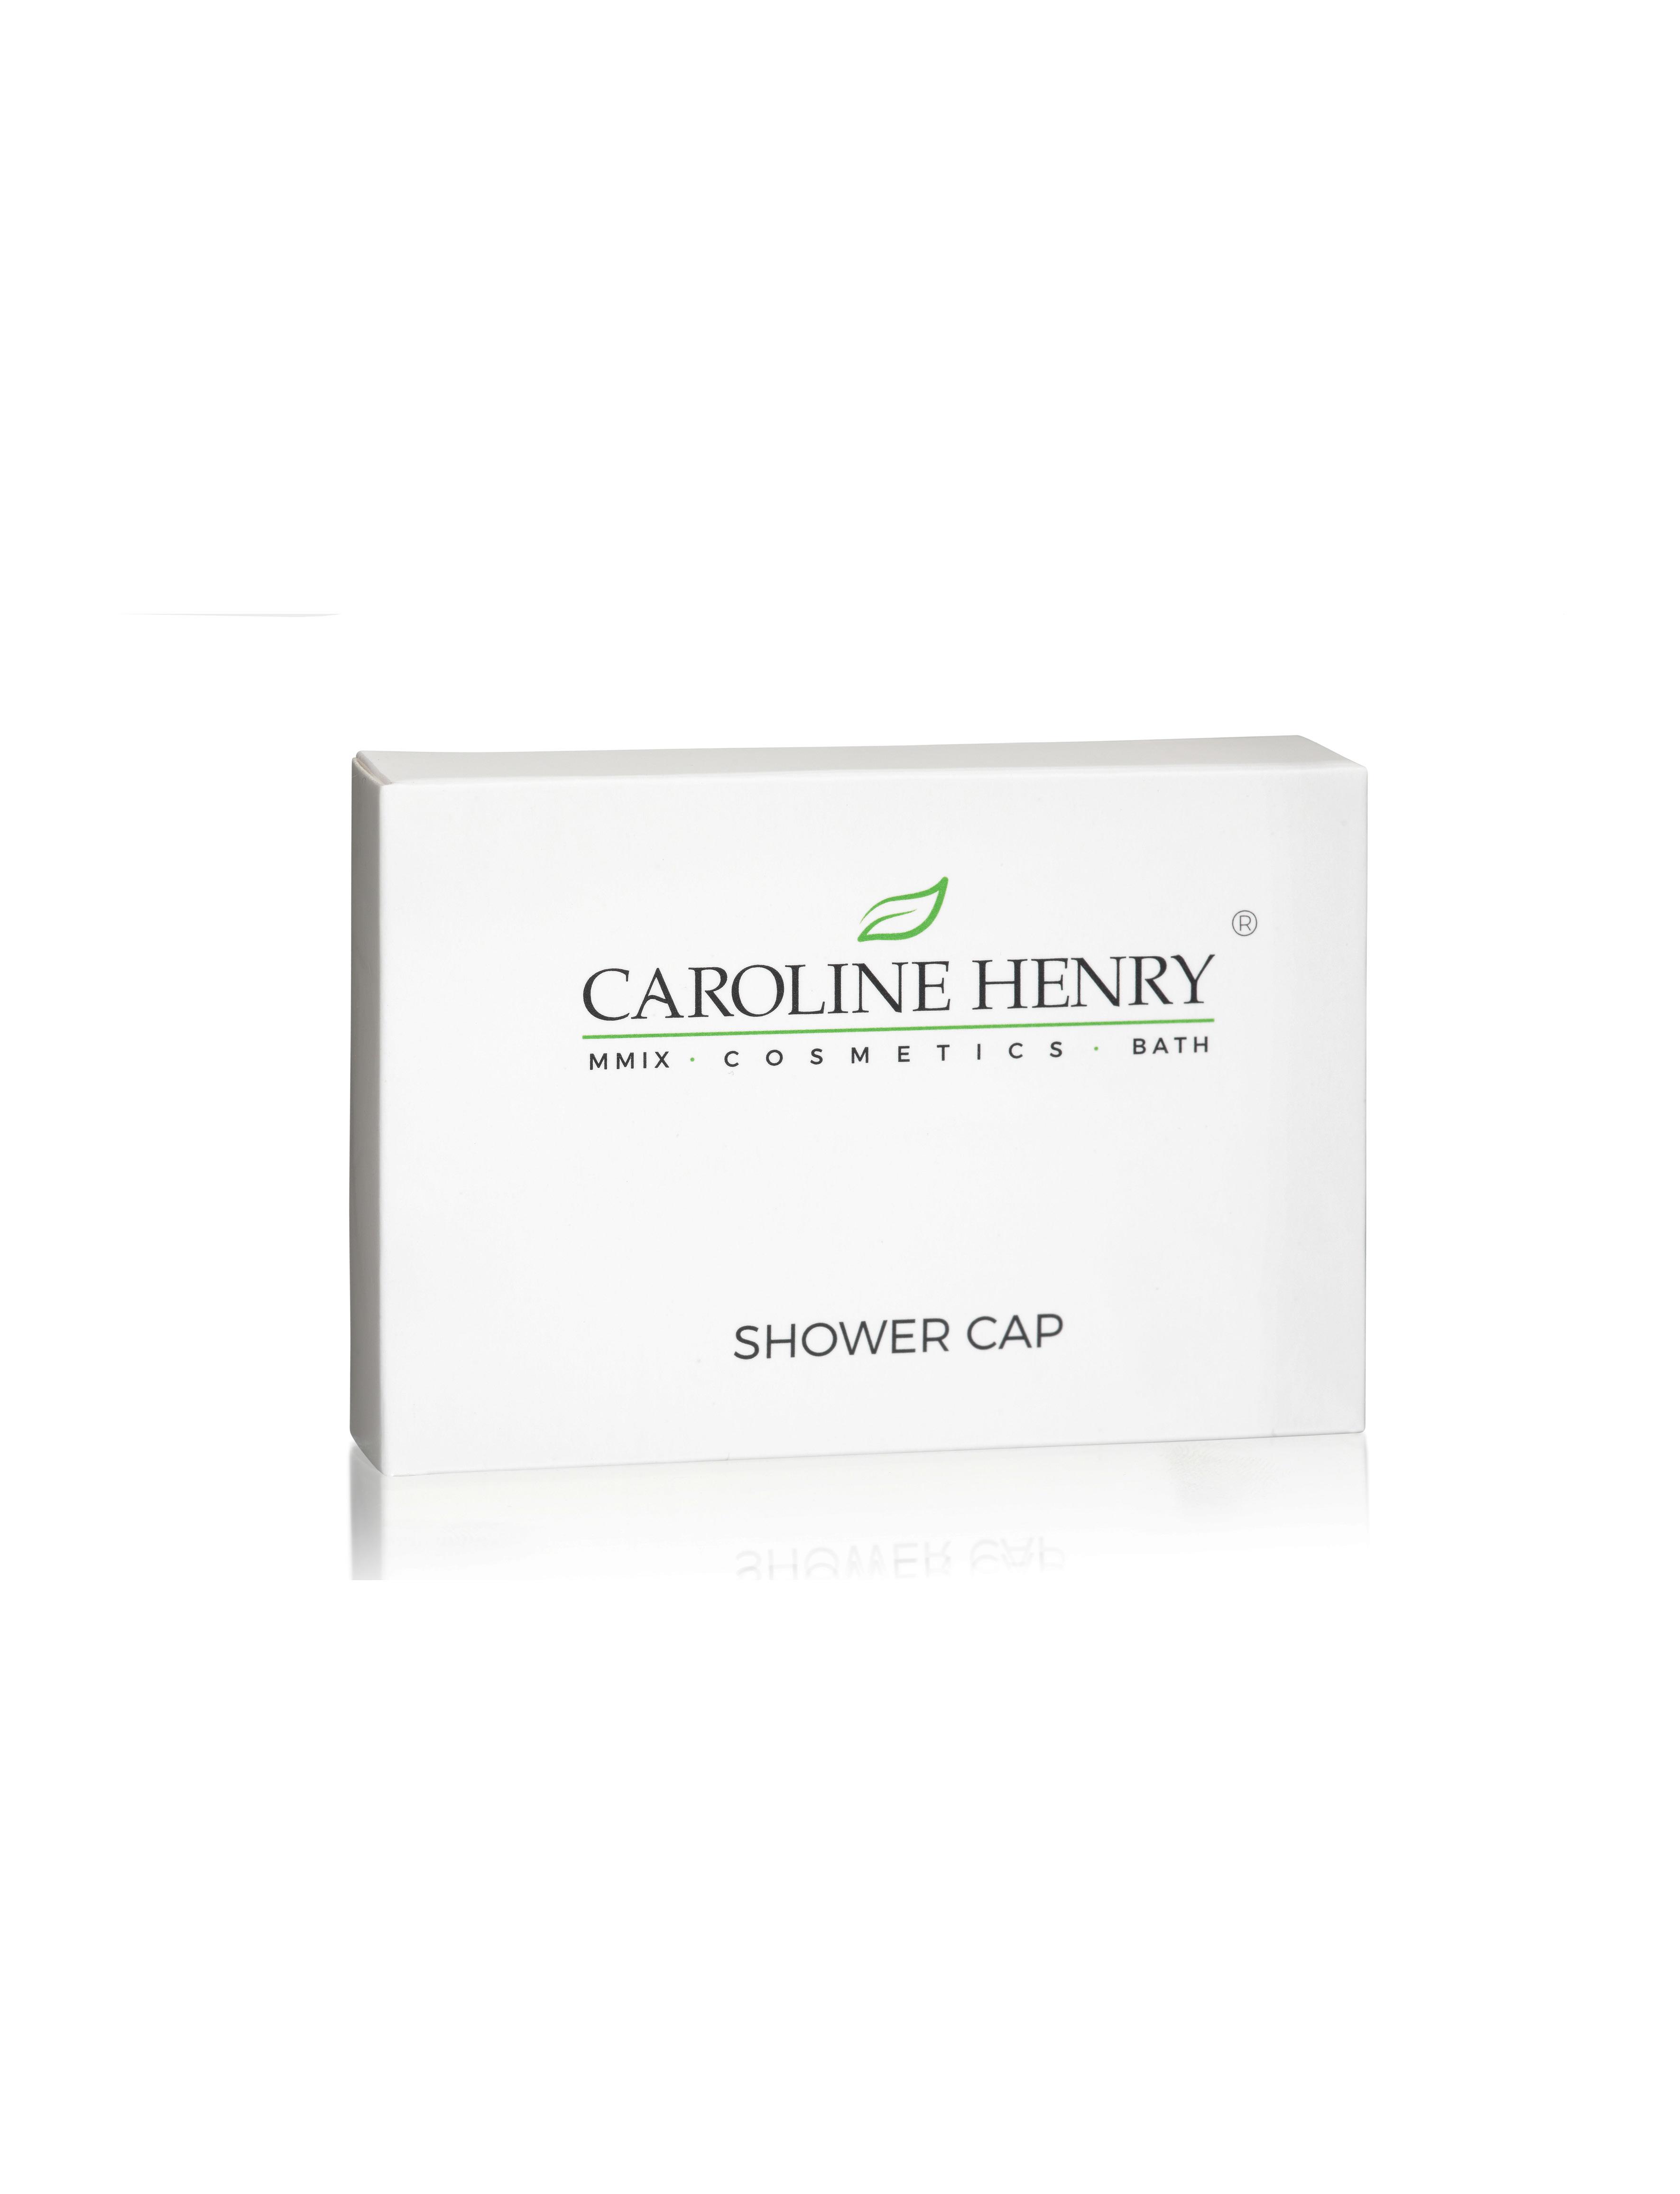 caroline henry hotel shower cap in a gloss white box